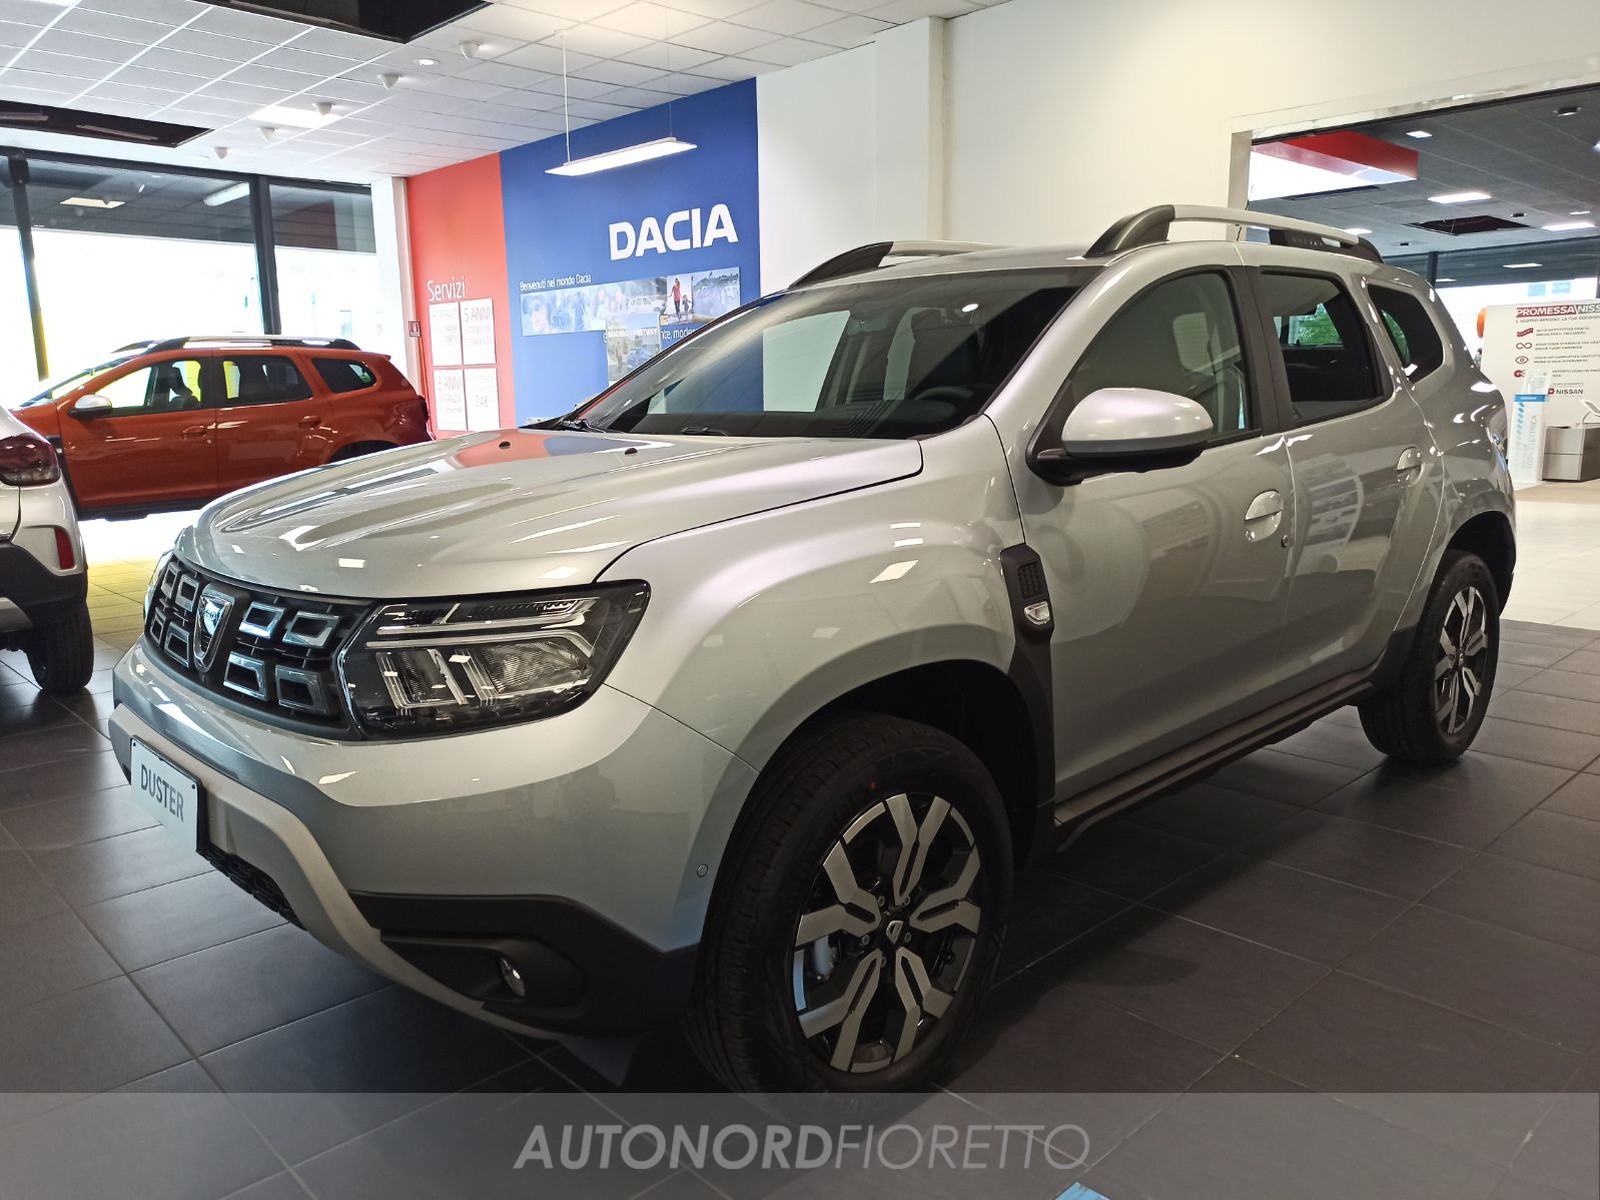 AUTONORD Dacia Duster